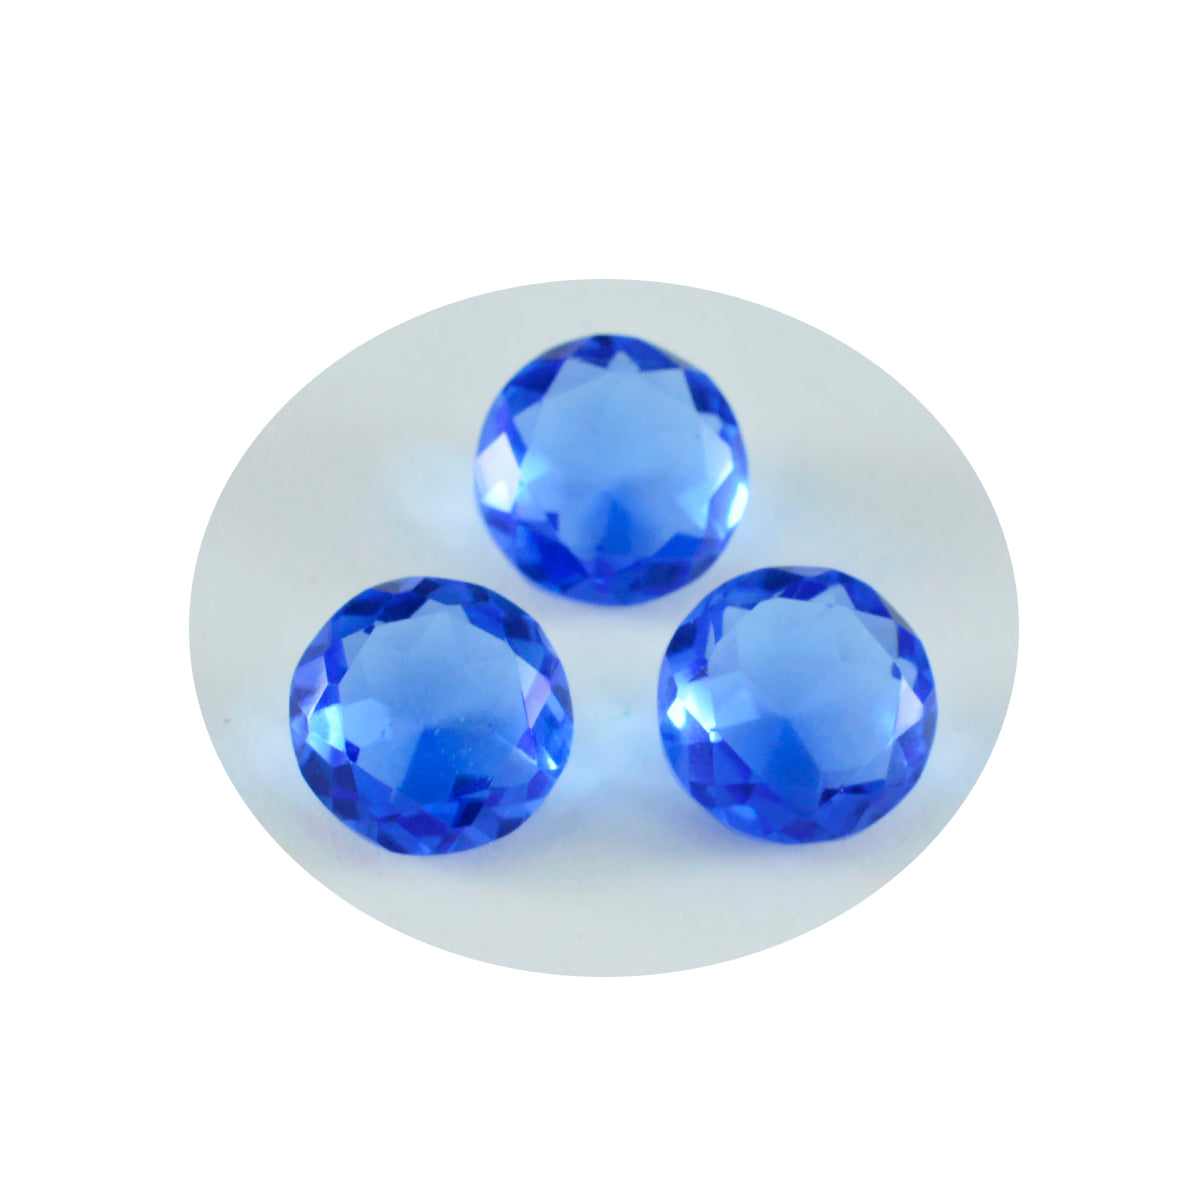 riyogems 1pc ブルー サファイア CZ ファセット 11x11 mm ラウンド形状かわいい品質の宝石